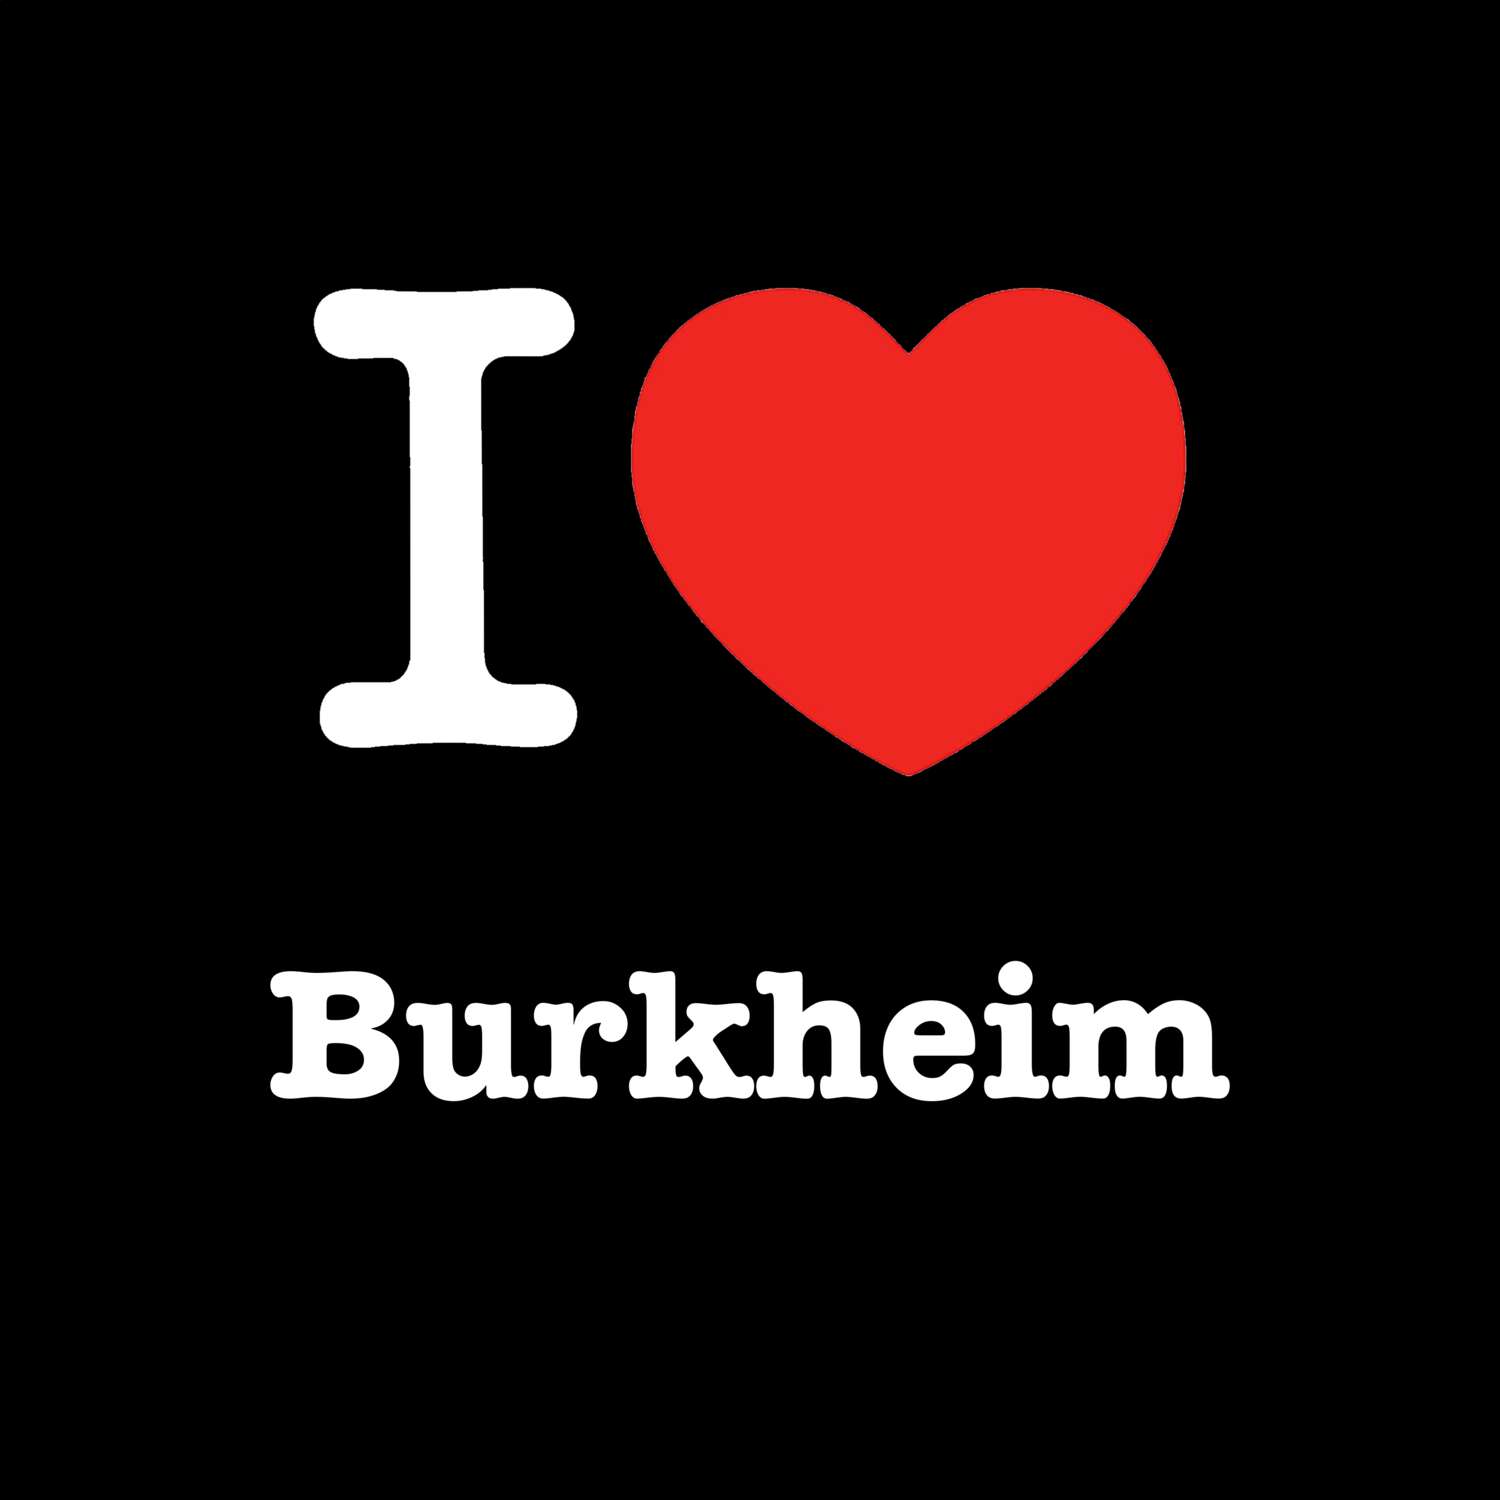 Burkheim T-Shirt »I love«